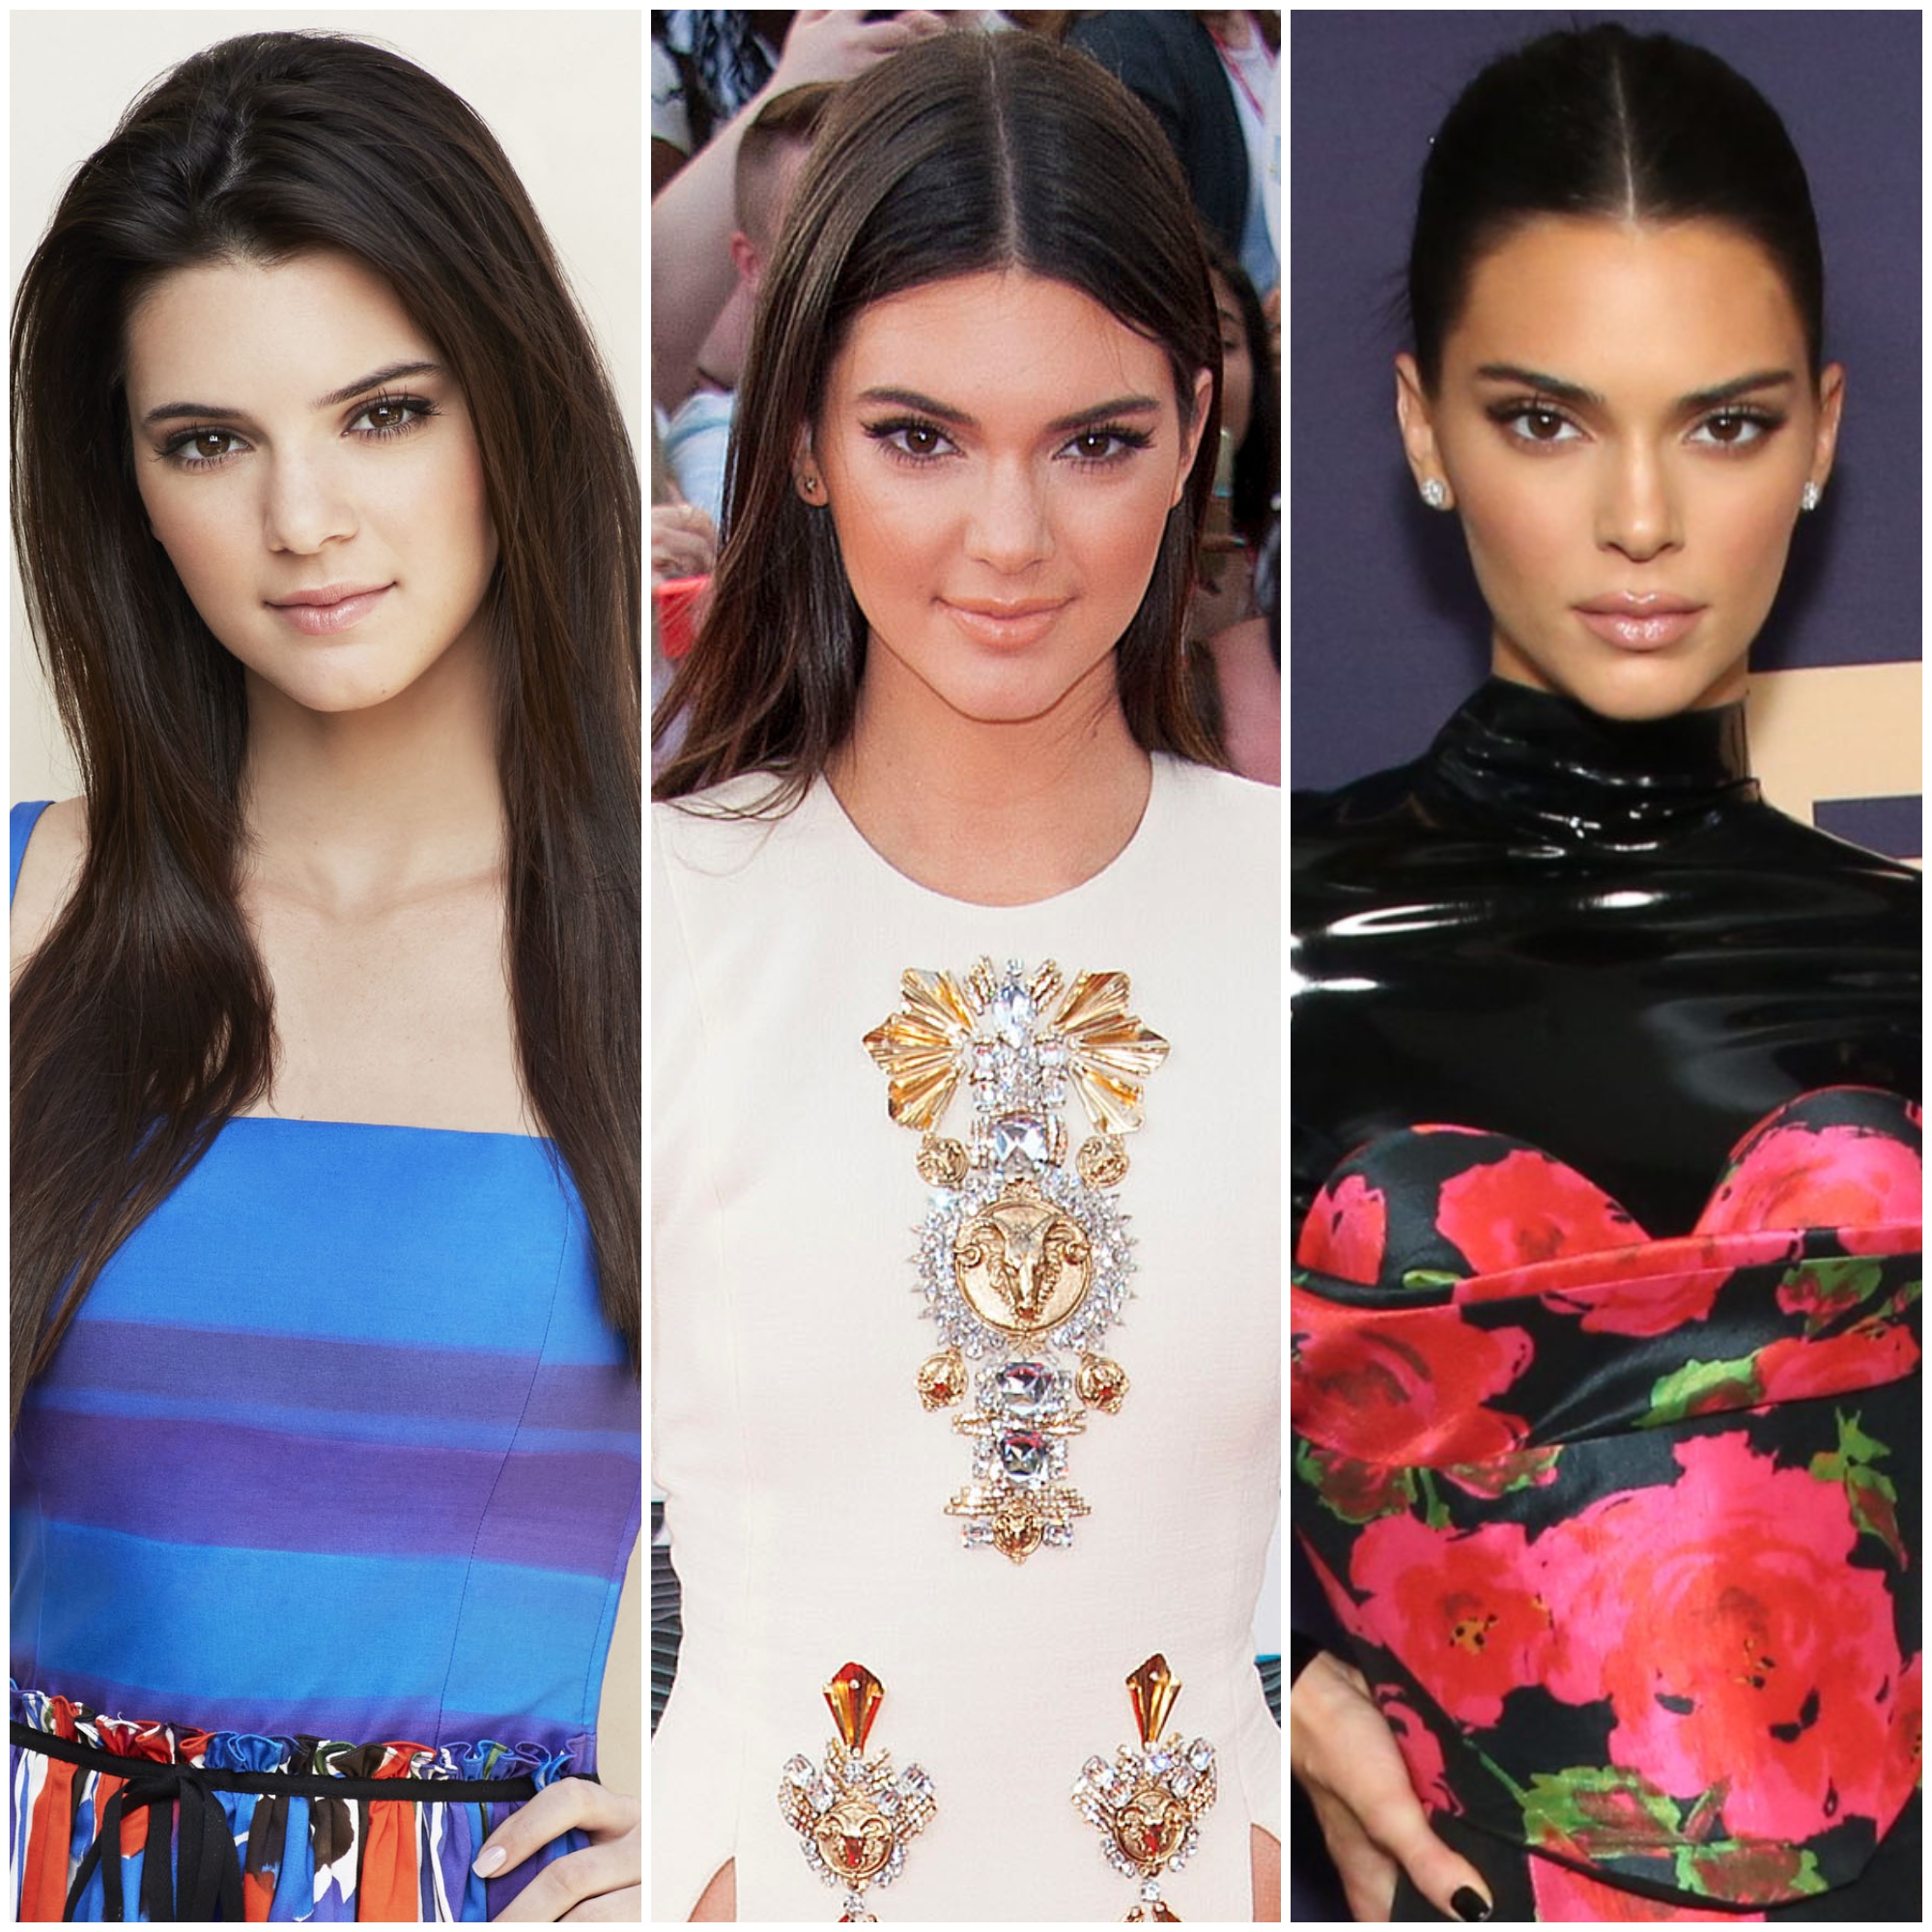 Kendall Jenner Model 2021 Wallpapers